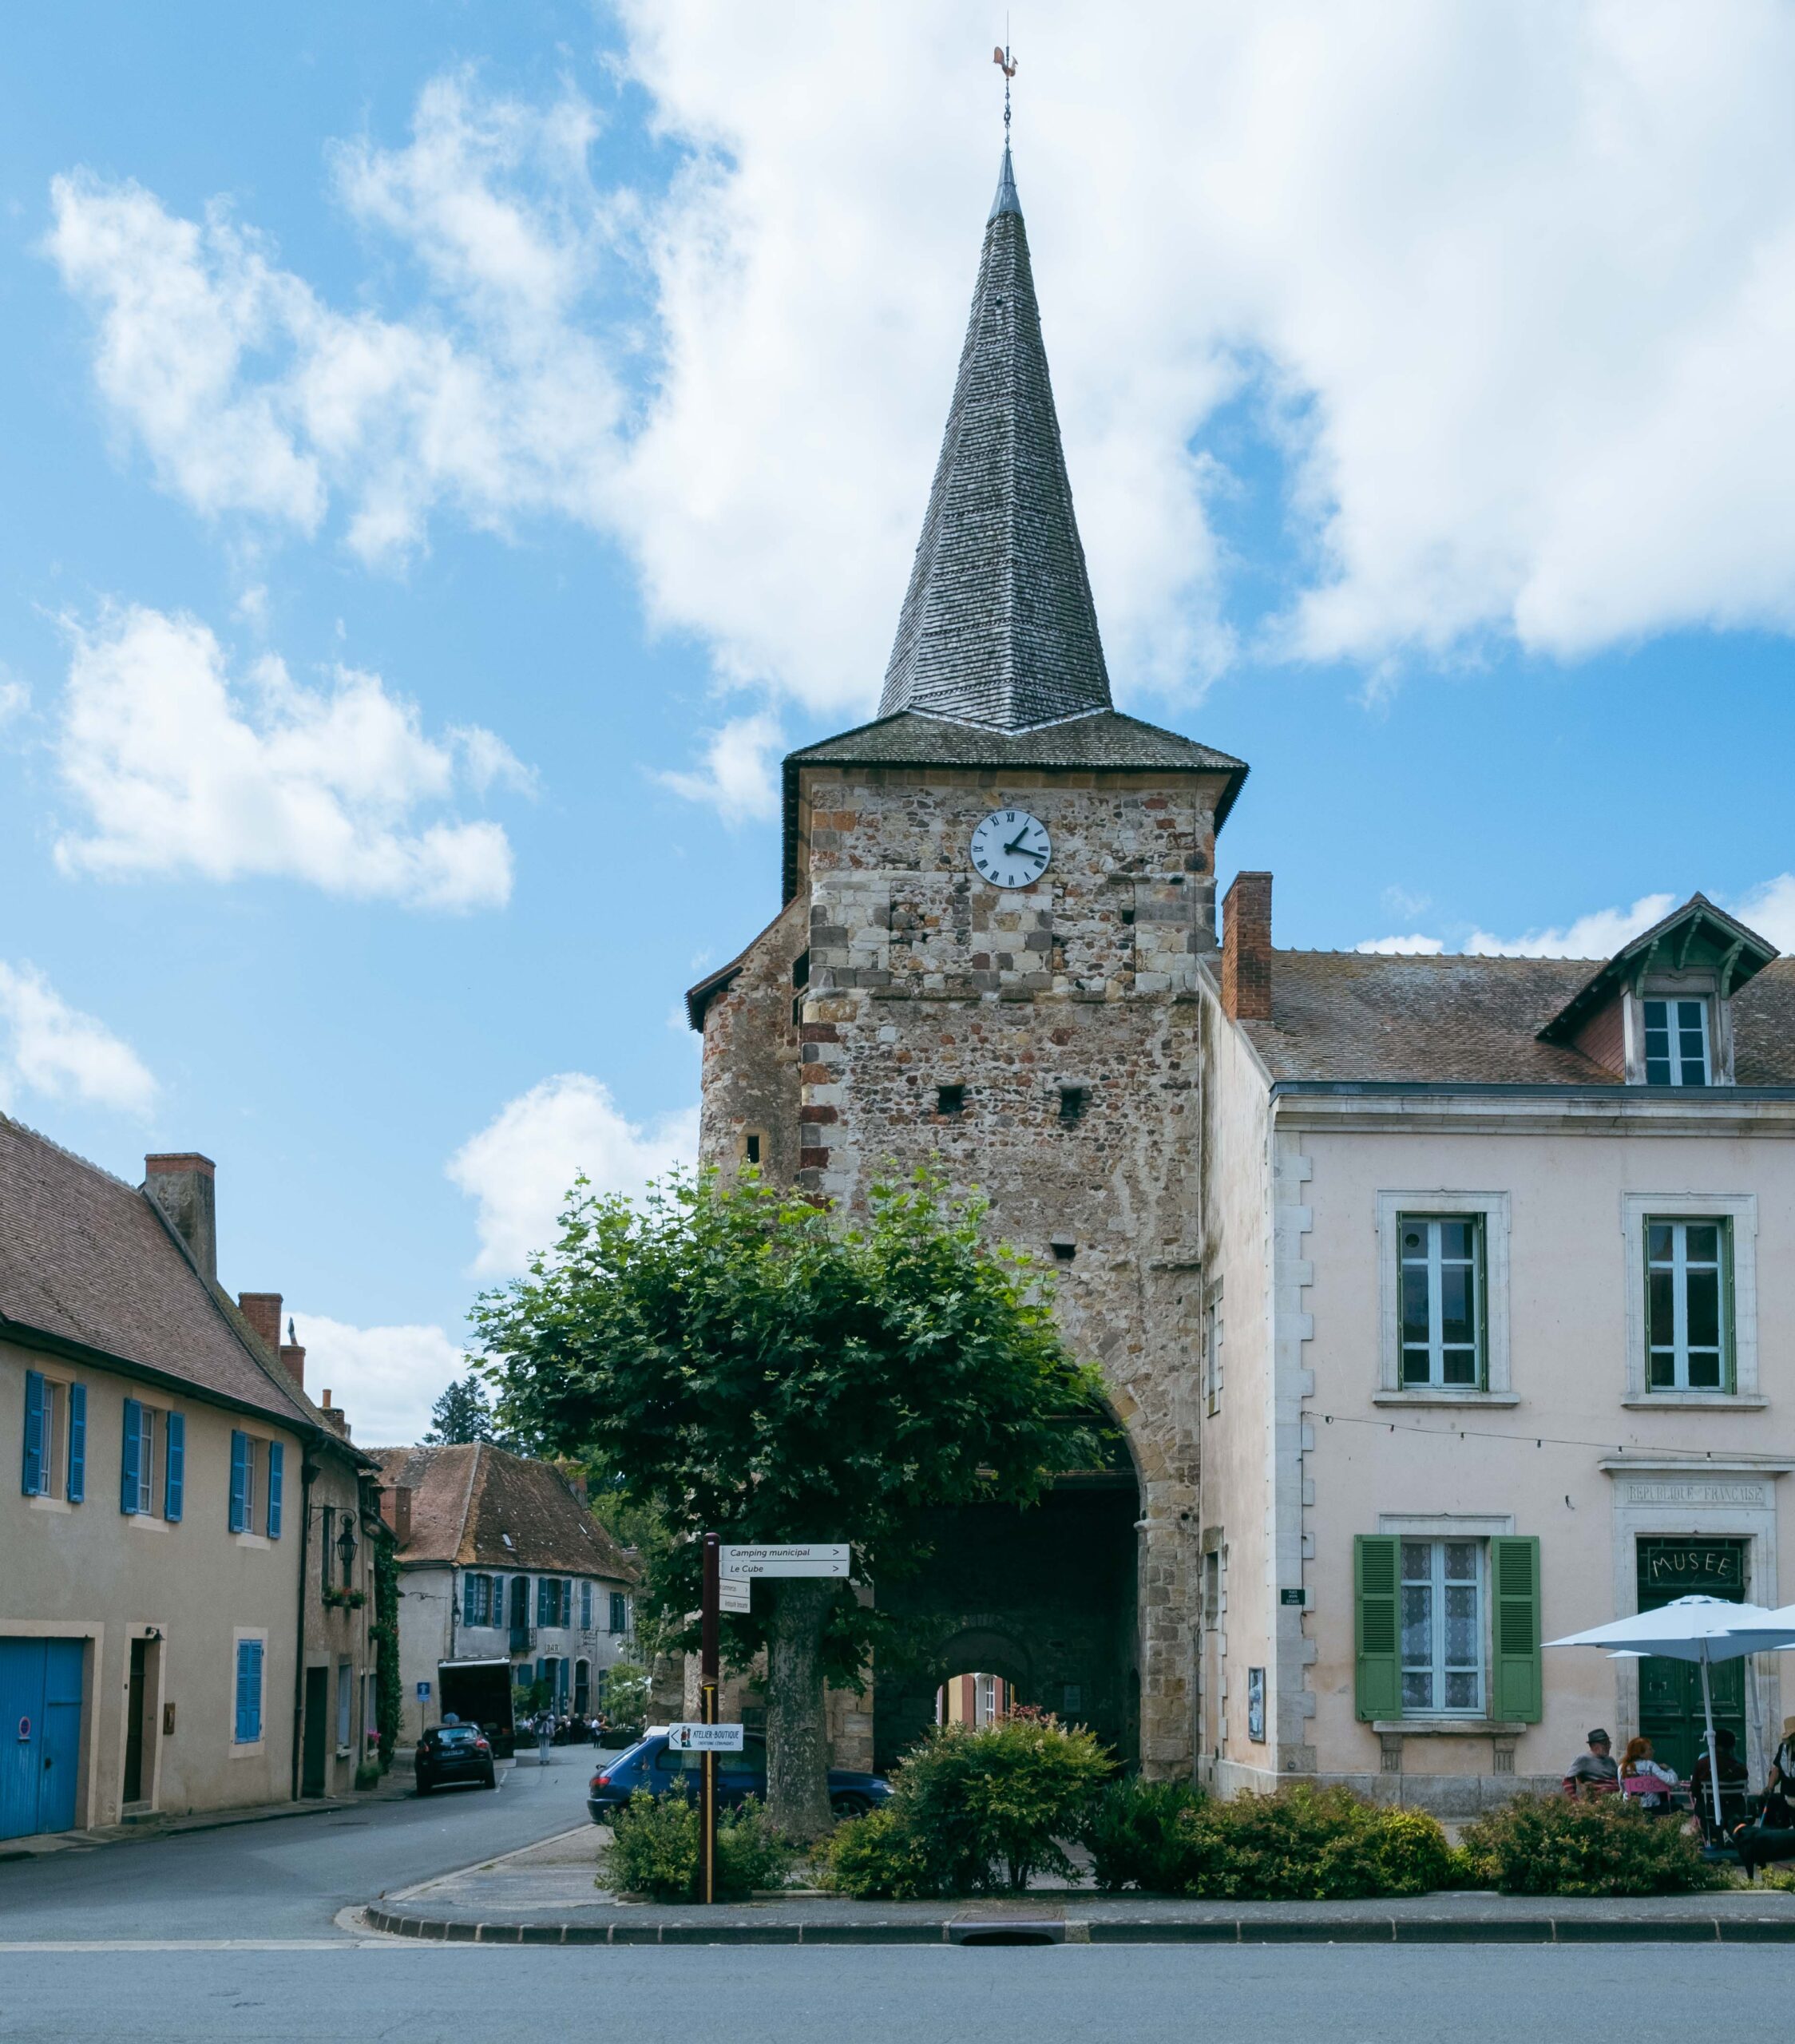 Hérisson village in Bourbon region of France